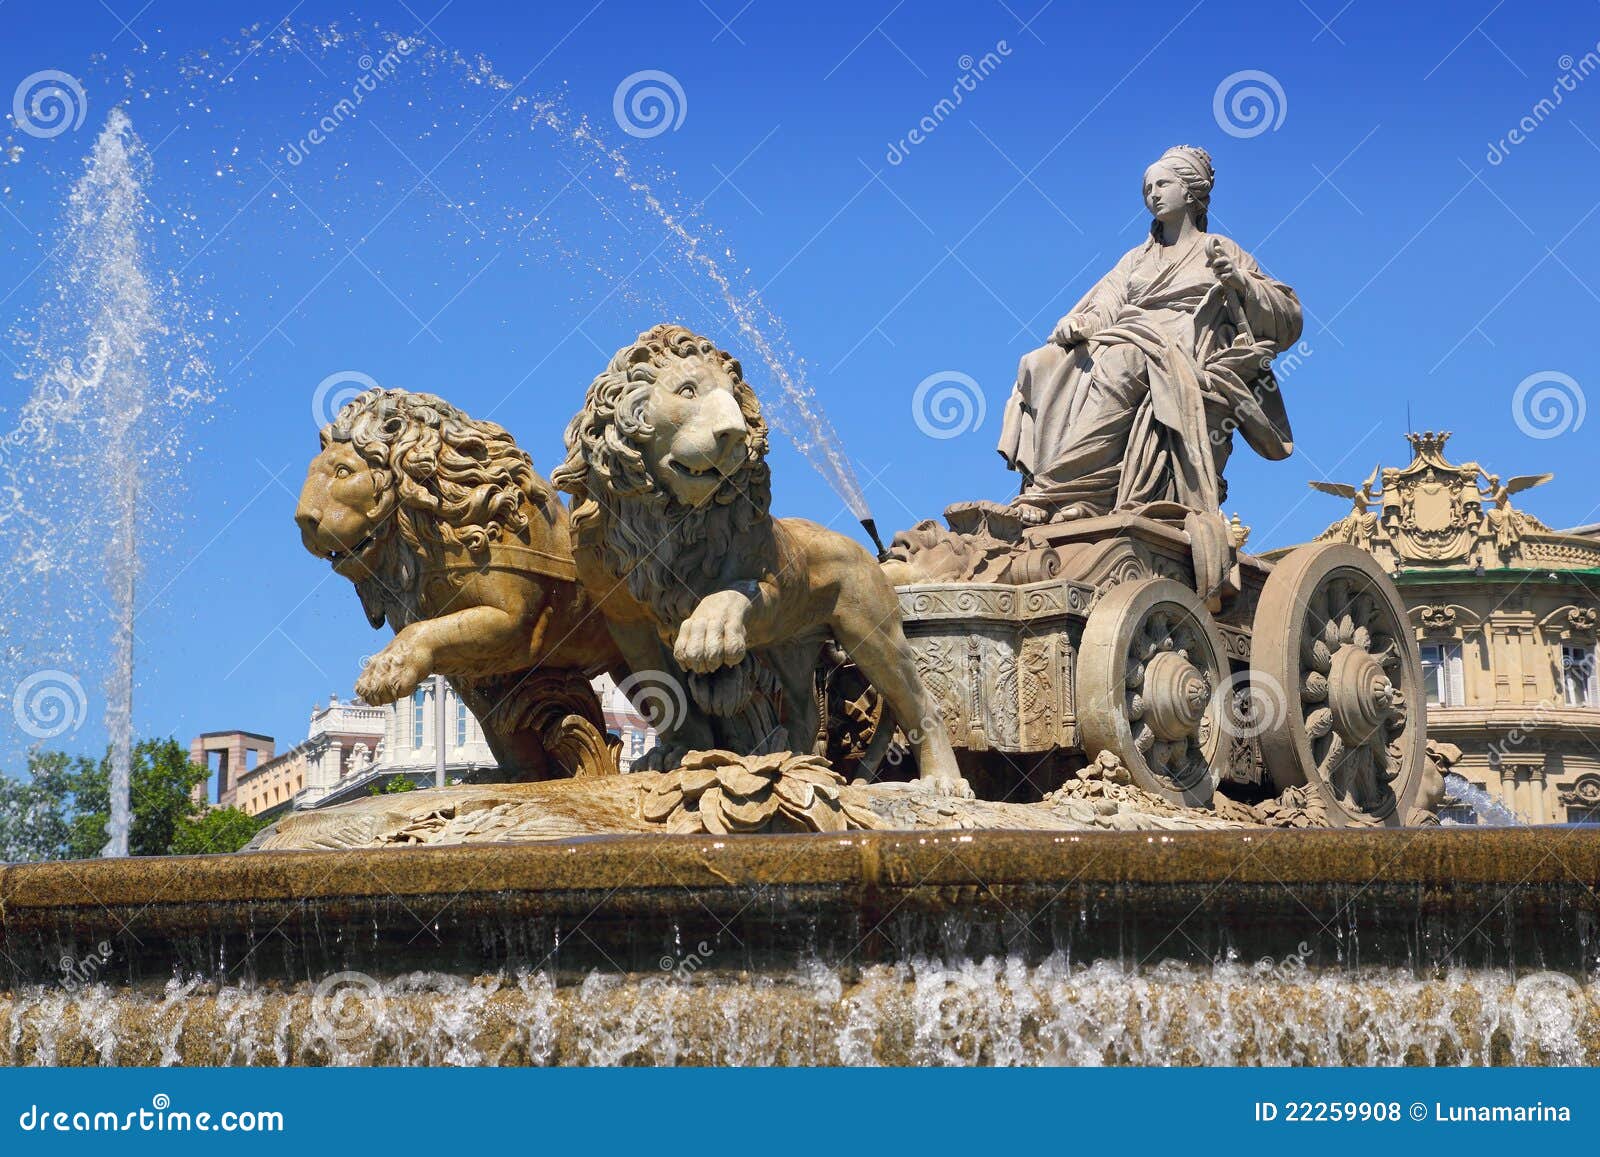 cibeles statue madrid fountain in paseo castellana